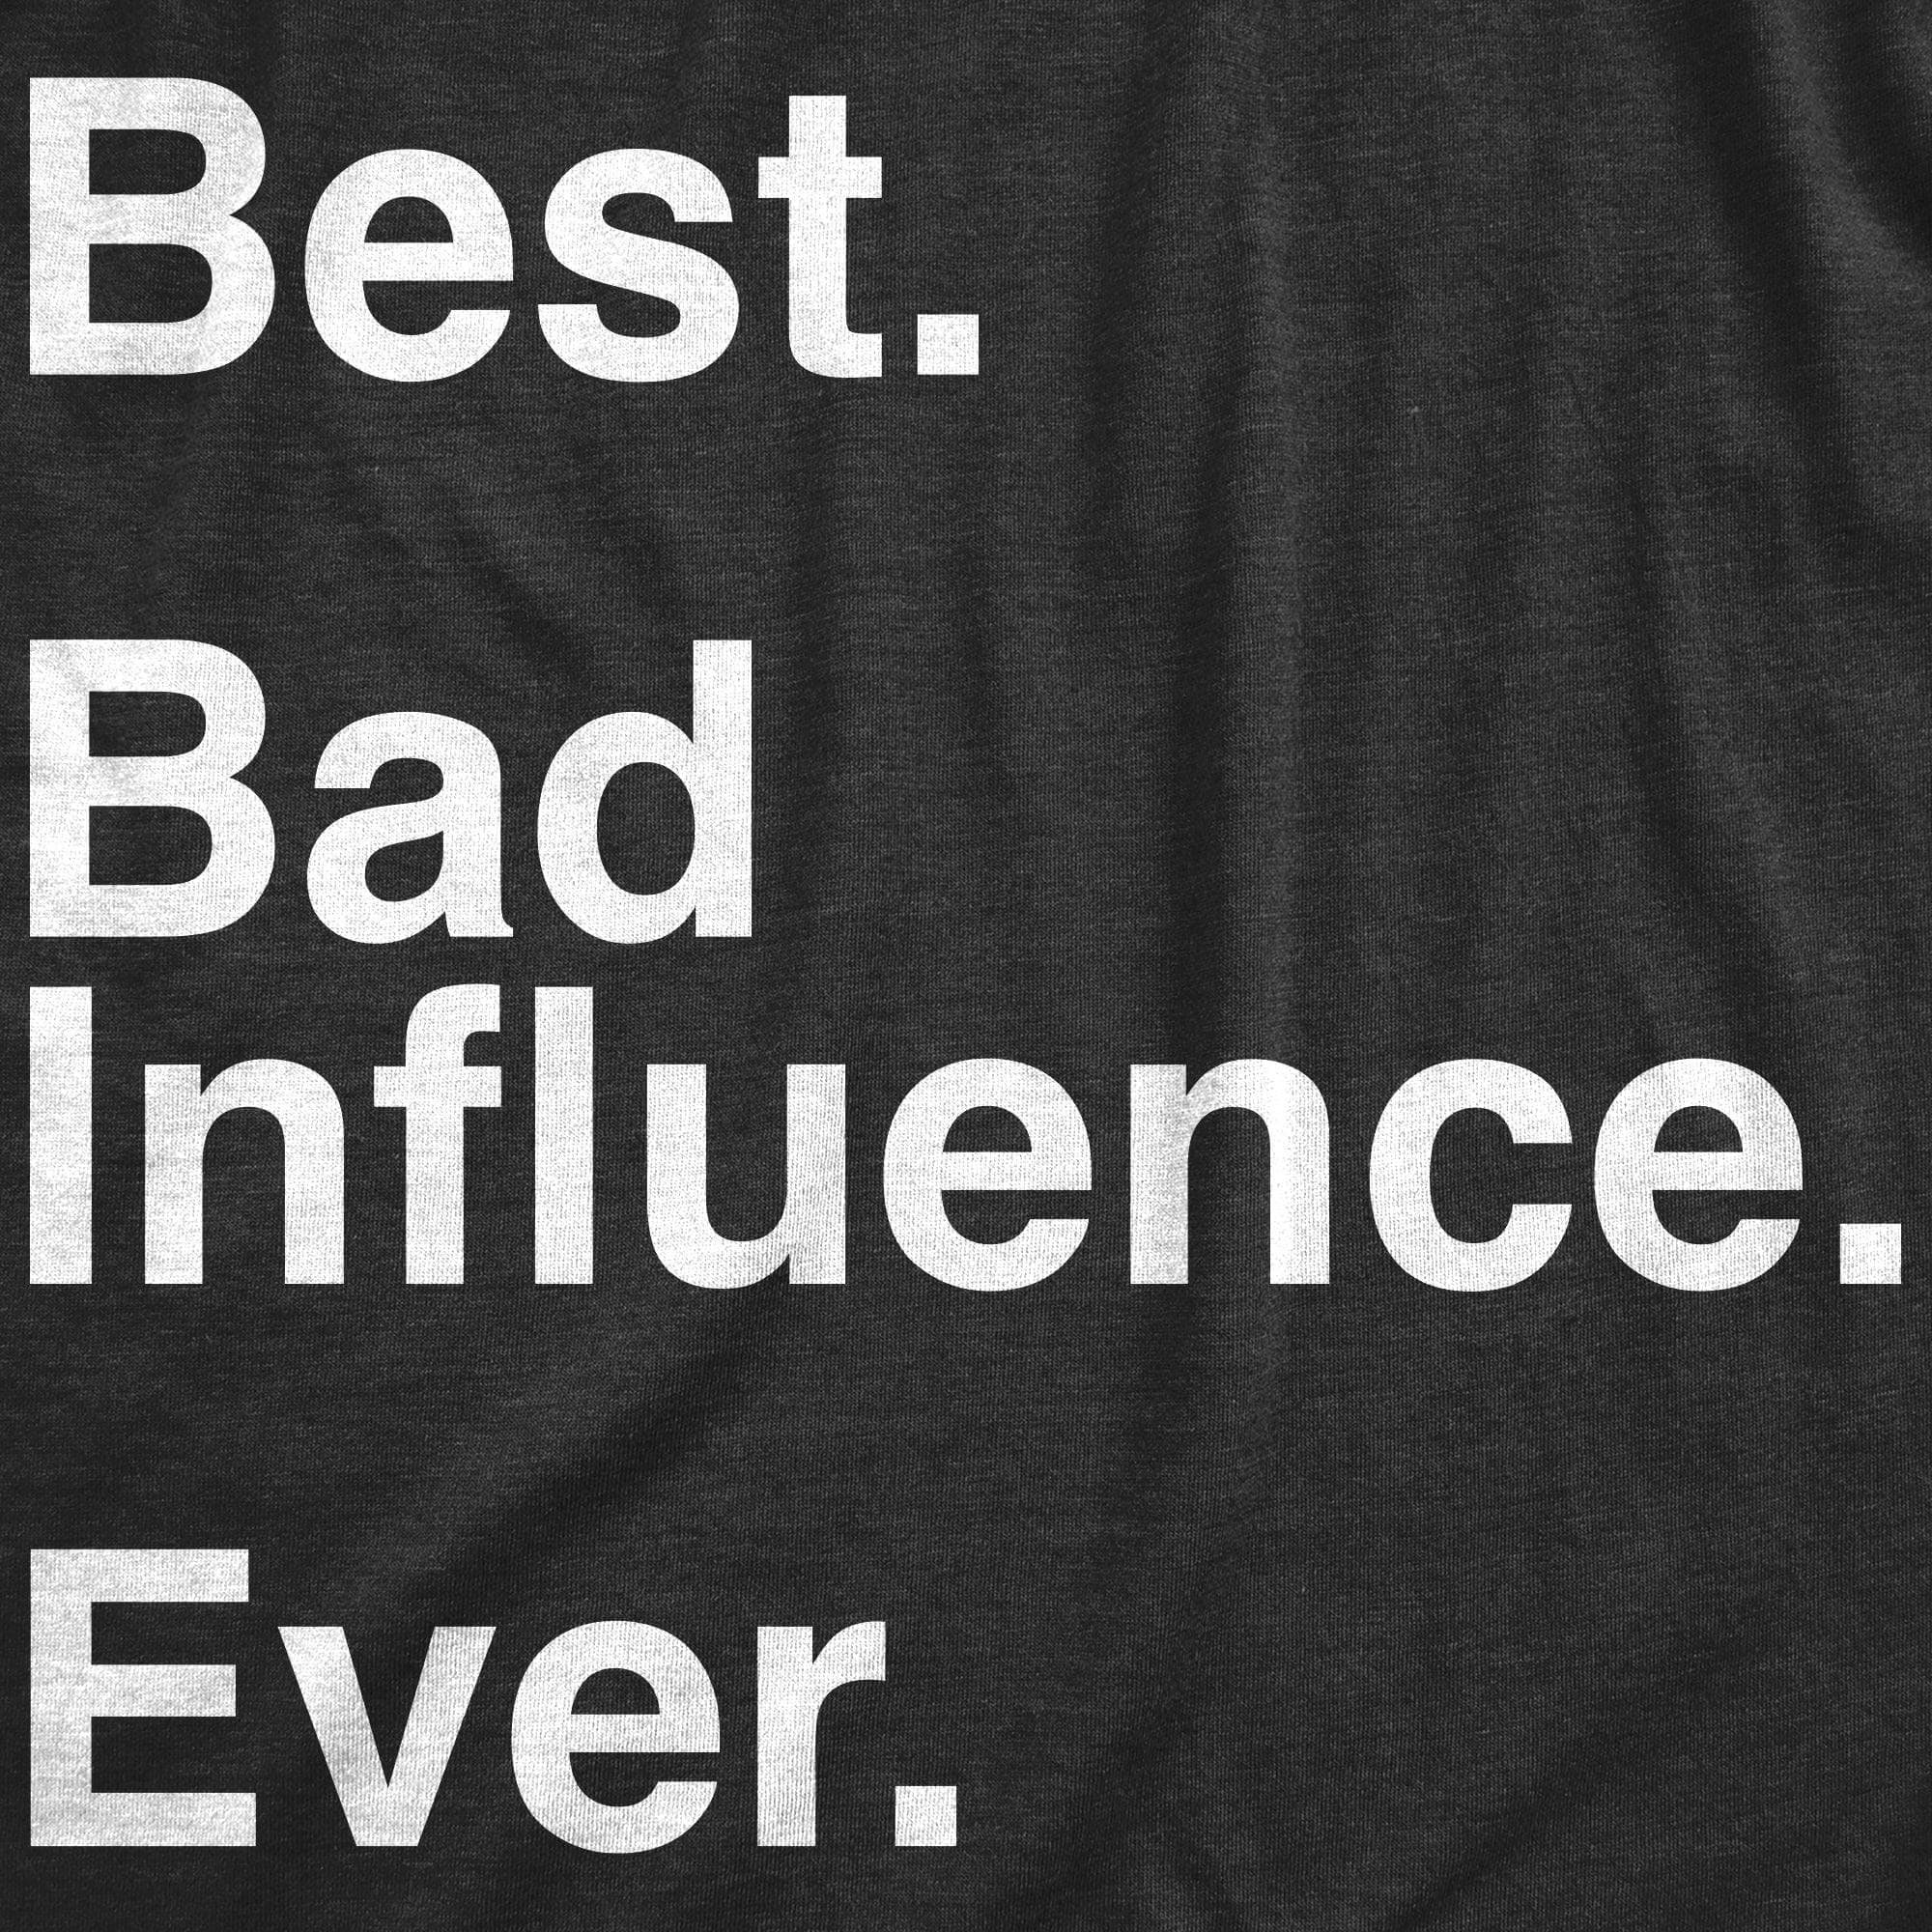 Best Bad Influence Ever Men's Tshirt  -  Crazy Dog T-Shirts